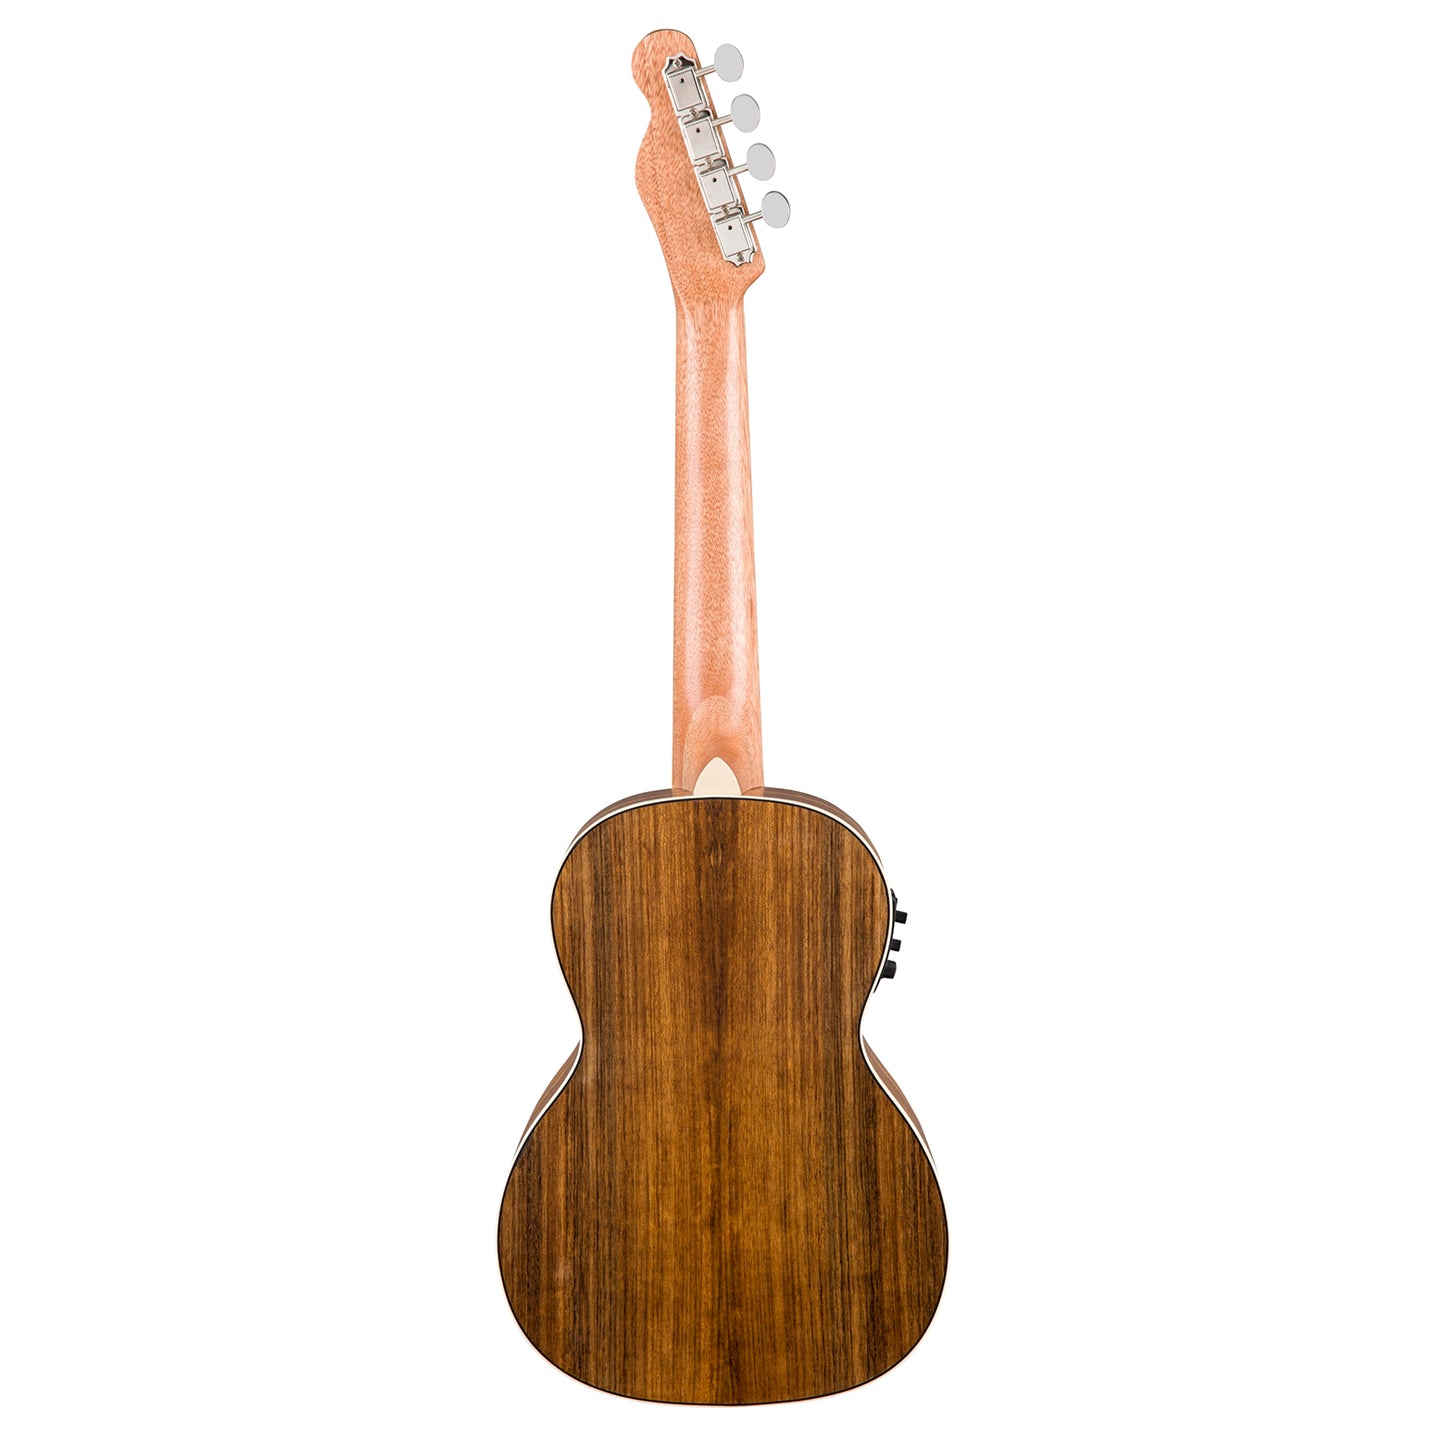 Fender Rincon Tenor Ukulele V2 Acoustic Electric 4 String Guitar with Built-in Tuner, Gig Bag, Natural Satin Finish